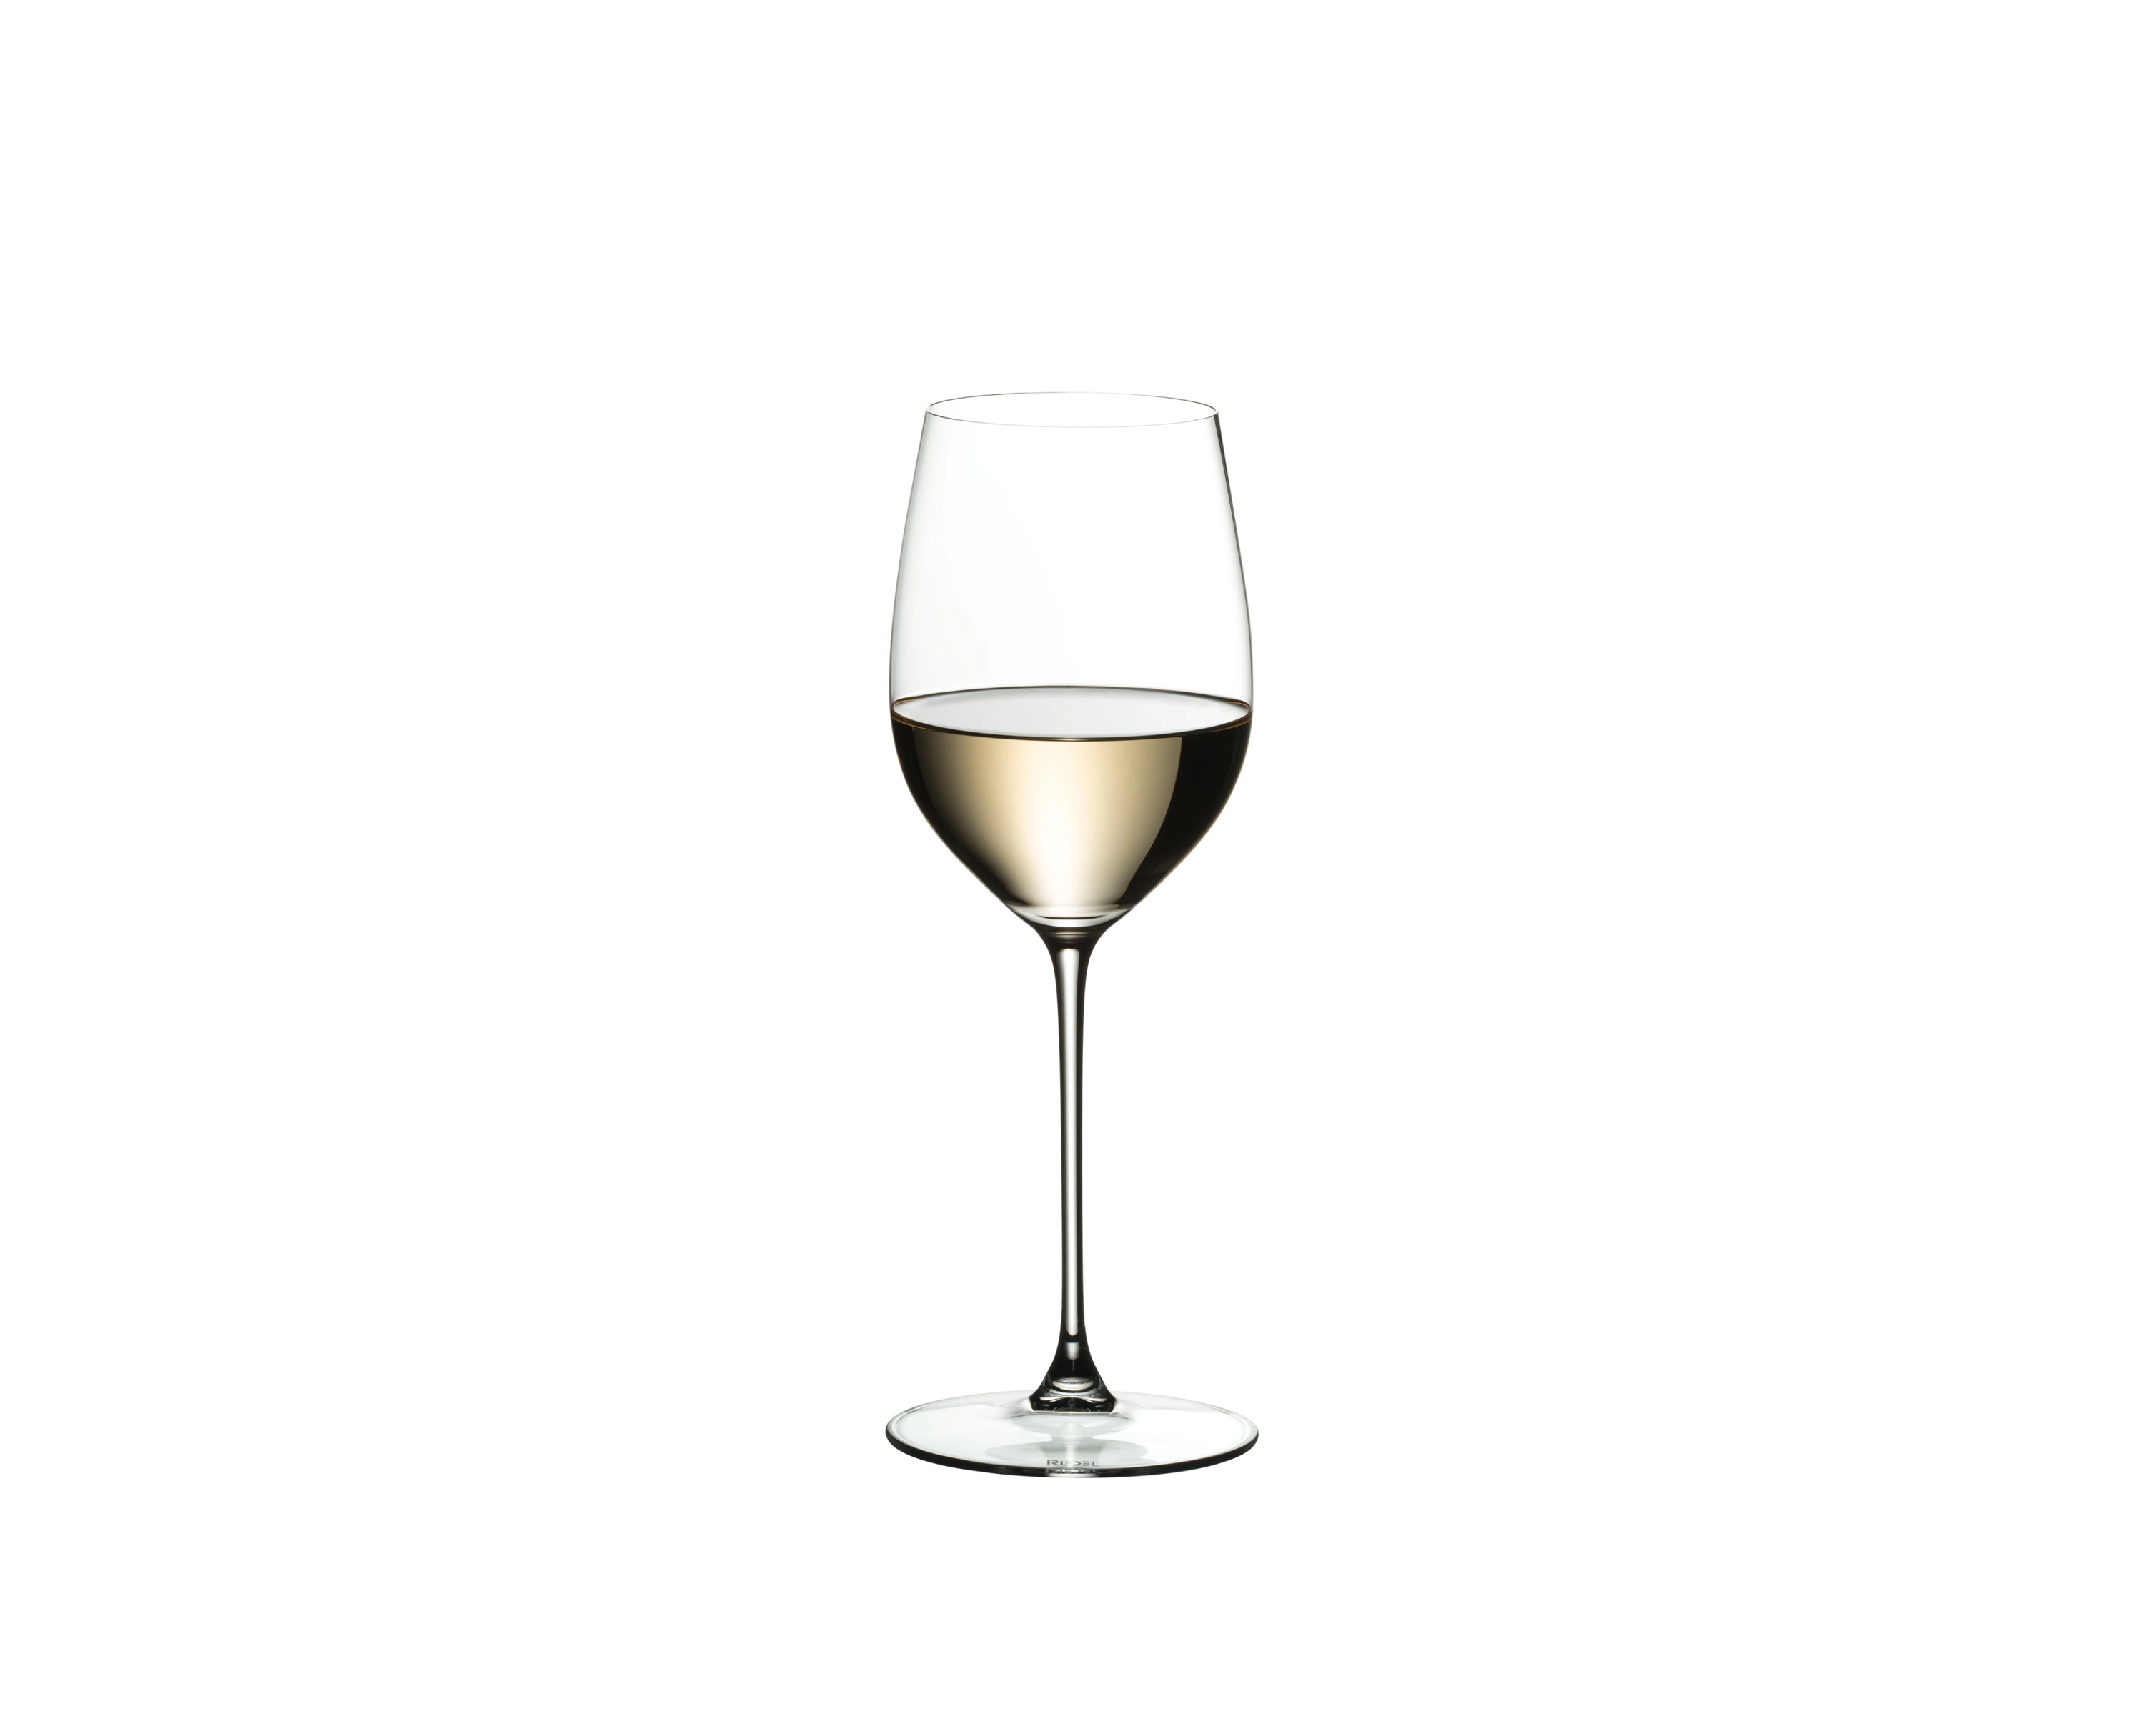 Riedel Veritas Calici Viognier/Chardonnay, Set di 2 bicchieri